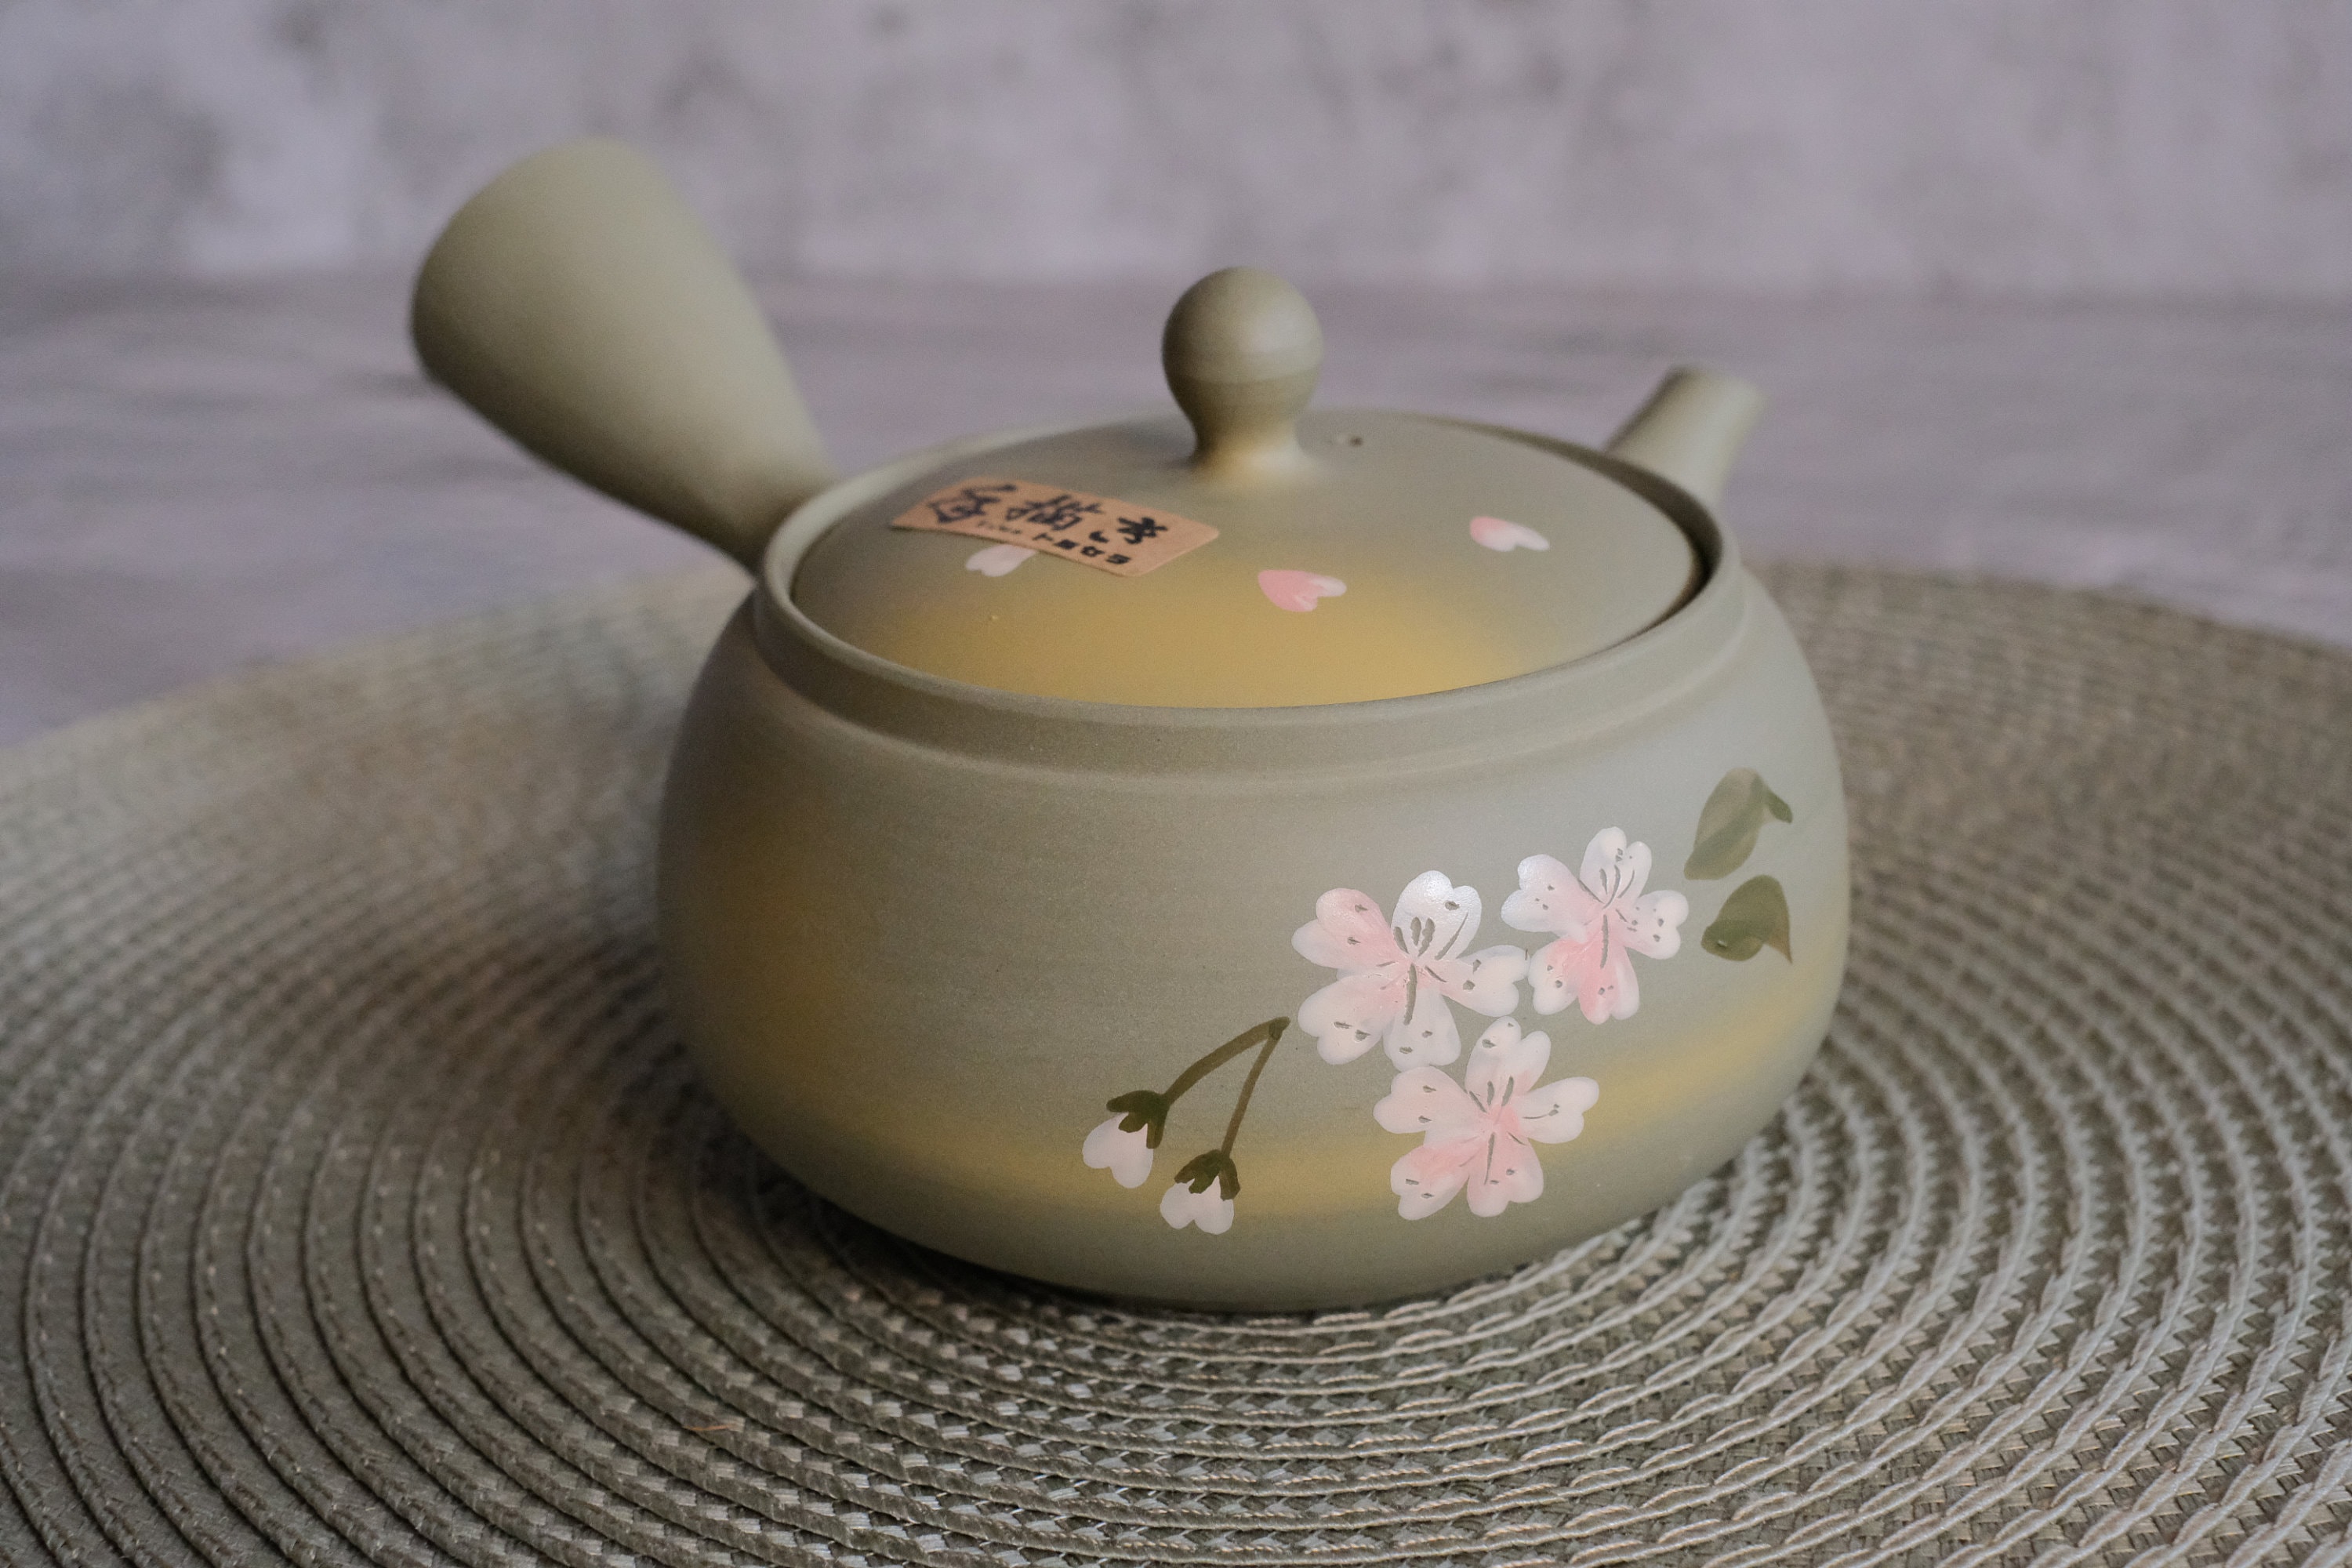 Sakura tea kettle & teapot salt & pepper shakers blue strawberry tan black  CUTE!